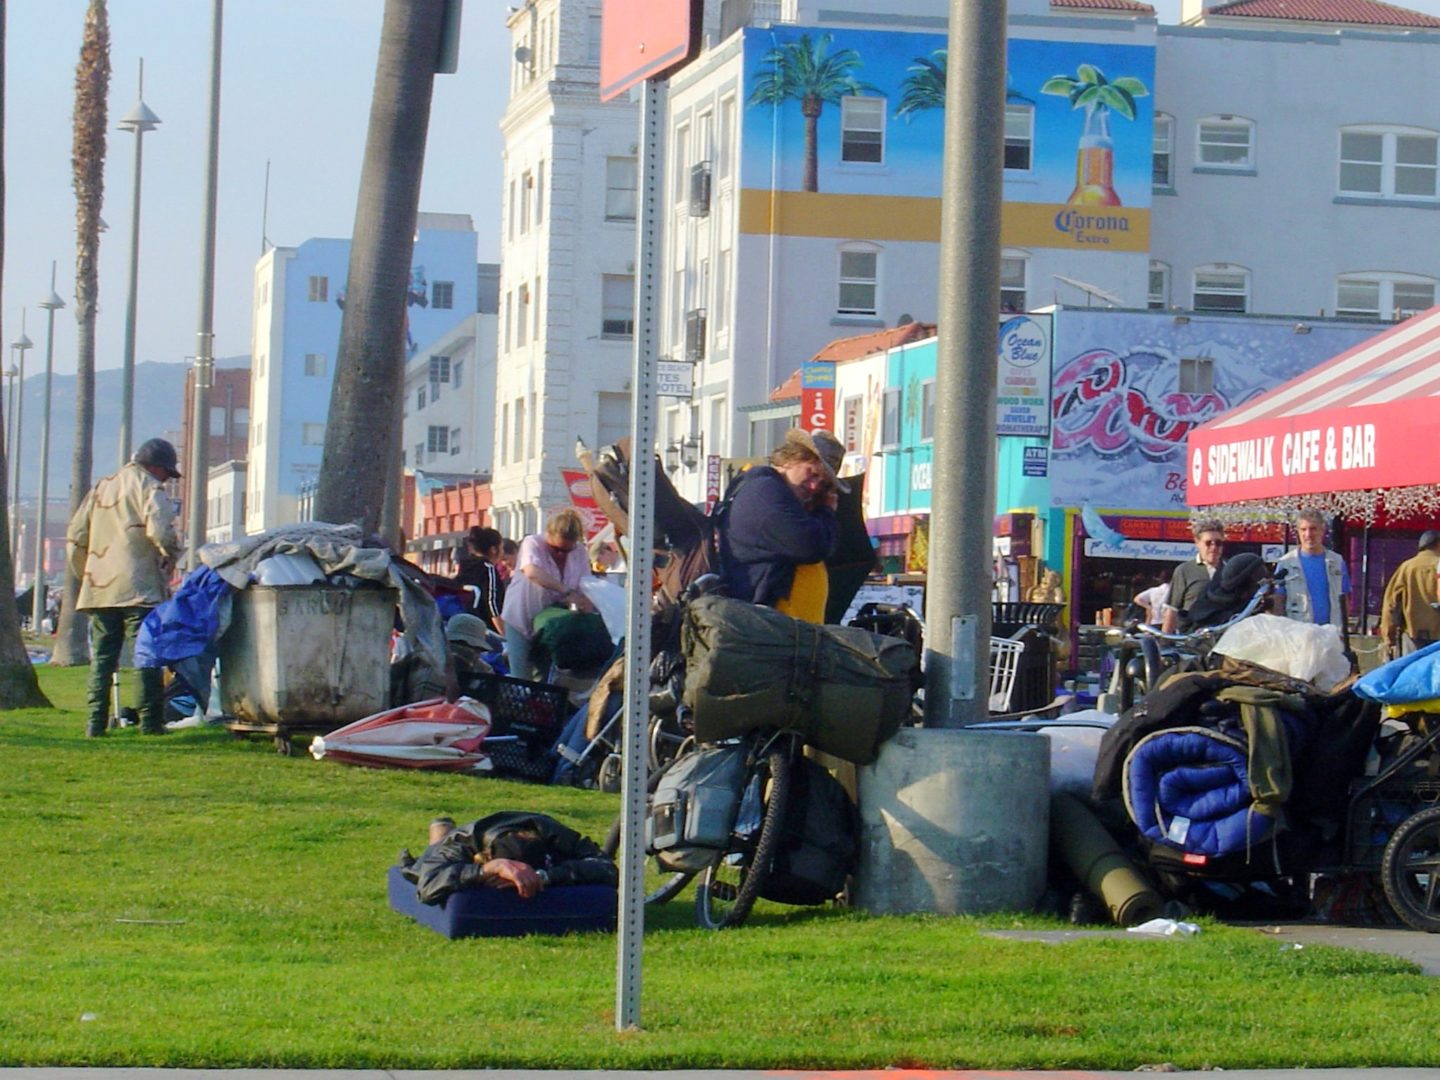 Venice Beach homeless encampment